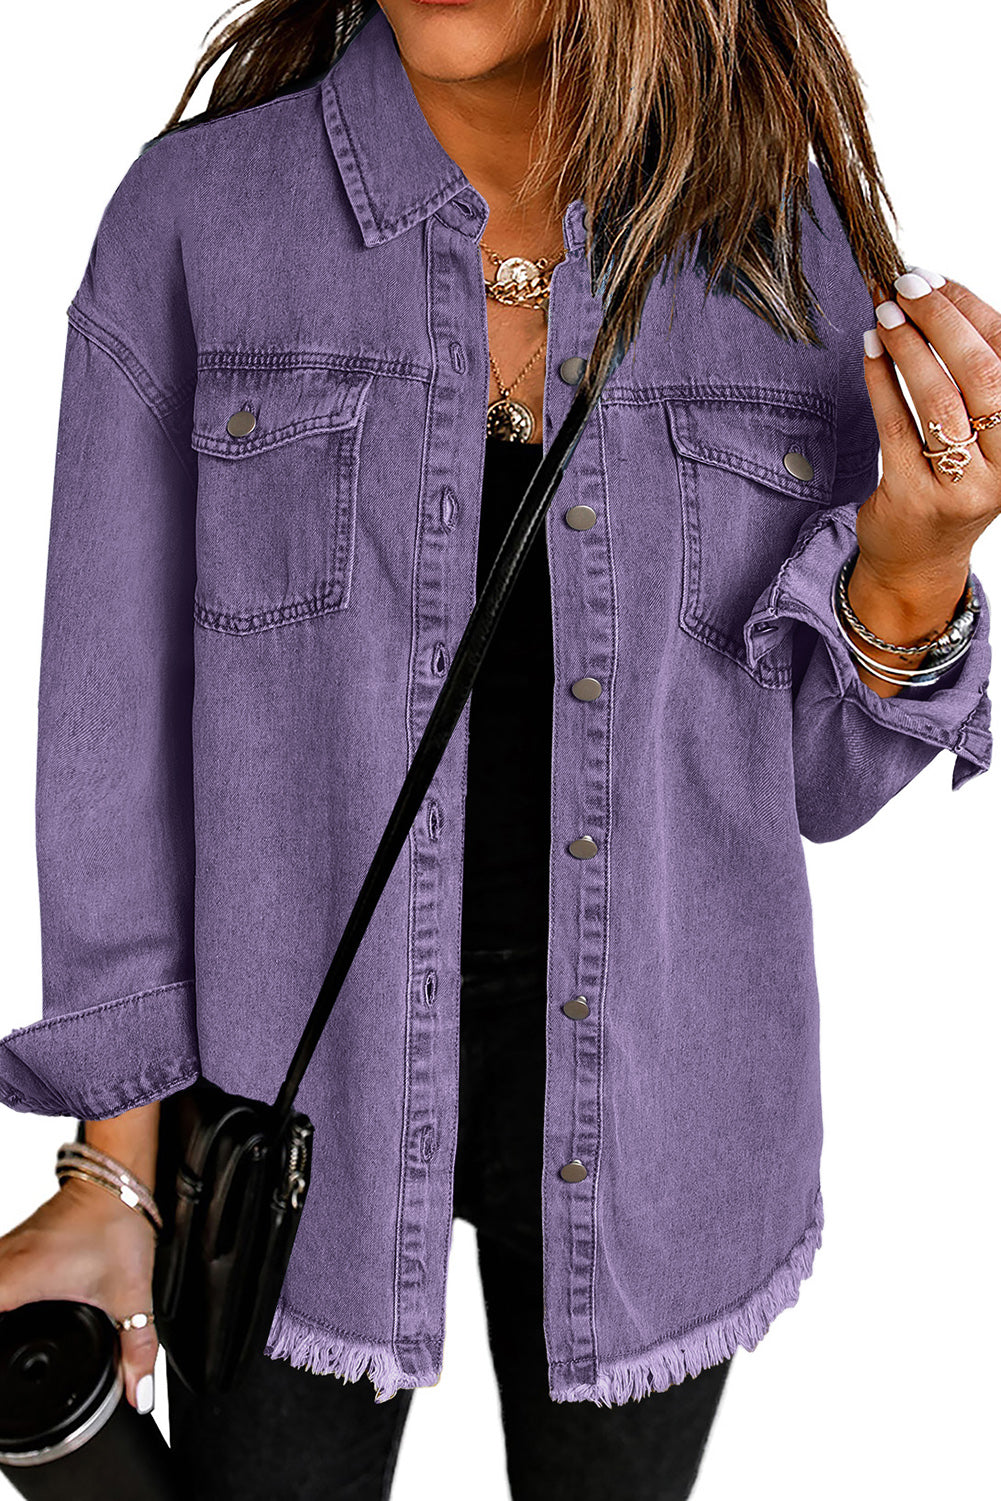 LC8511377-8-S, LC8511377-8-M, LC8511377-8-L, LC8511377-8-XL, LC8511377-8-2XL, Purple Women’s Oversized Shacket Pocket Long Boyfriend Raw Hem Button Jacket